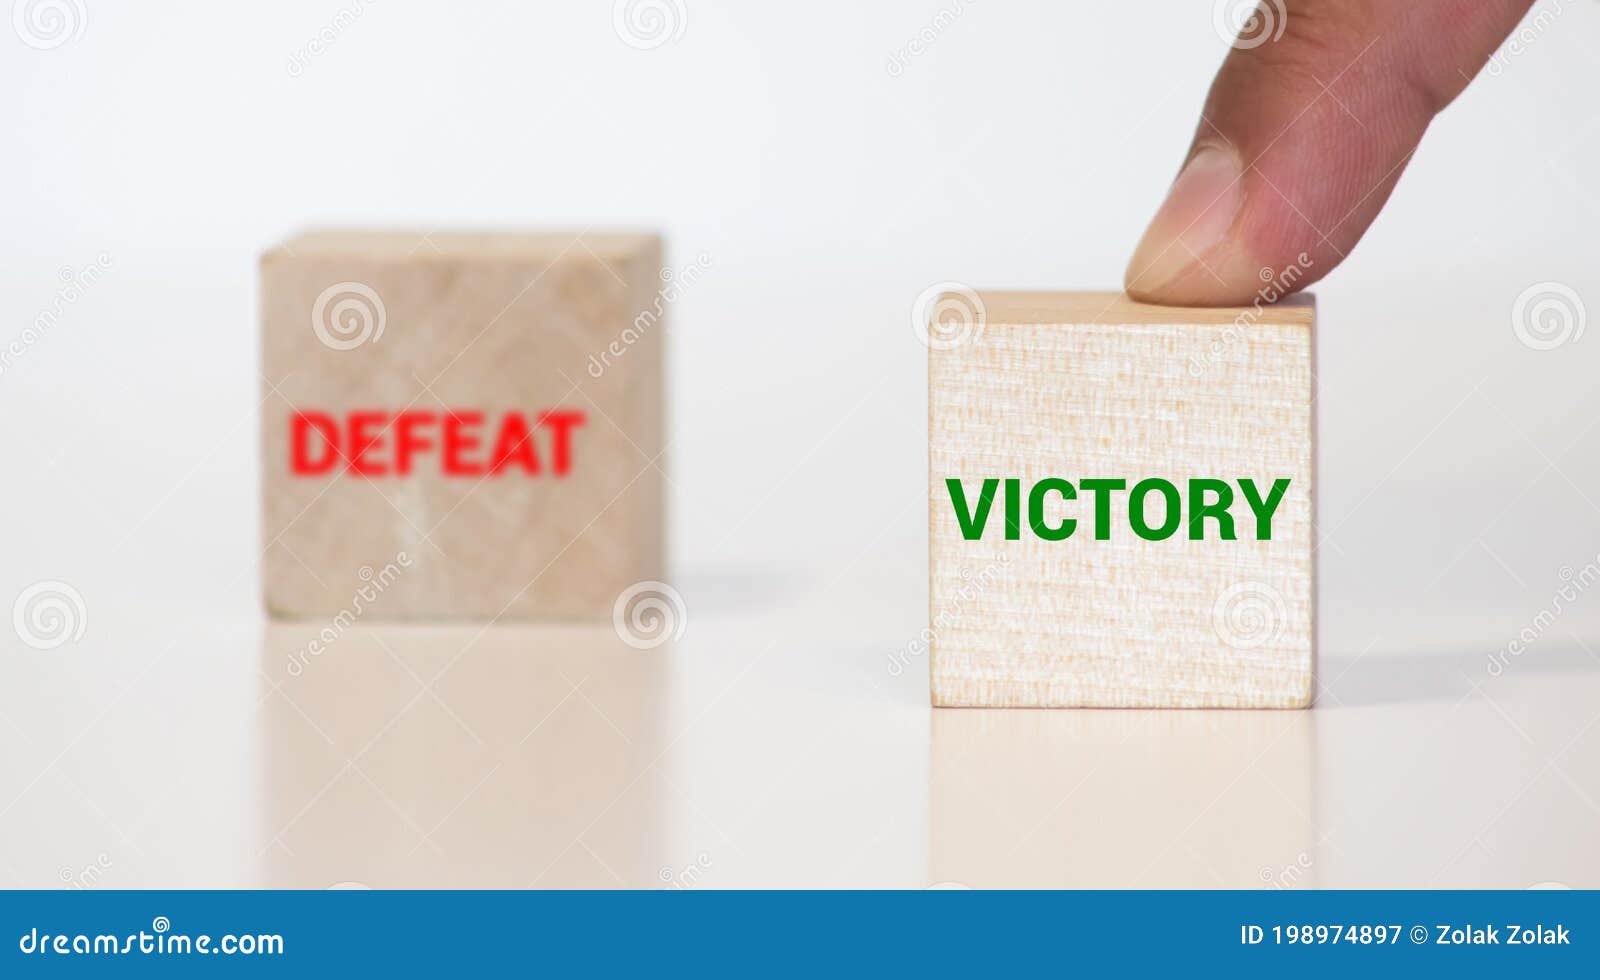 victorie